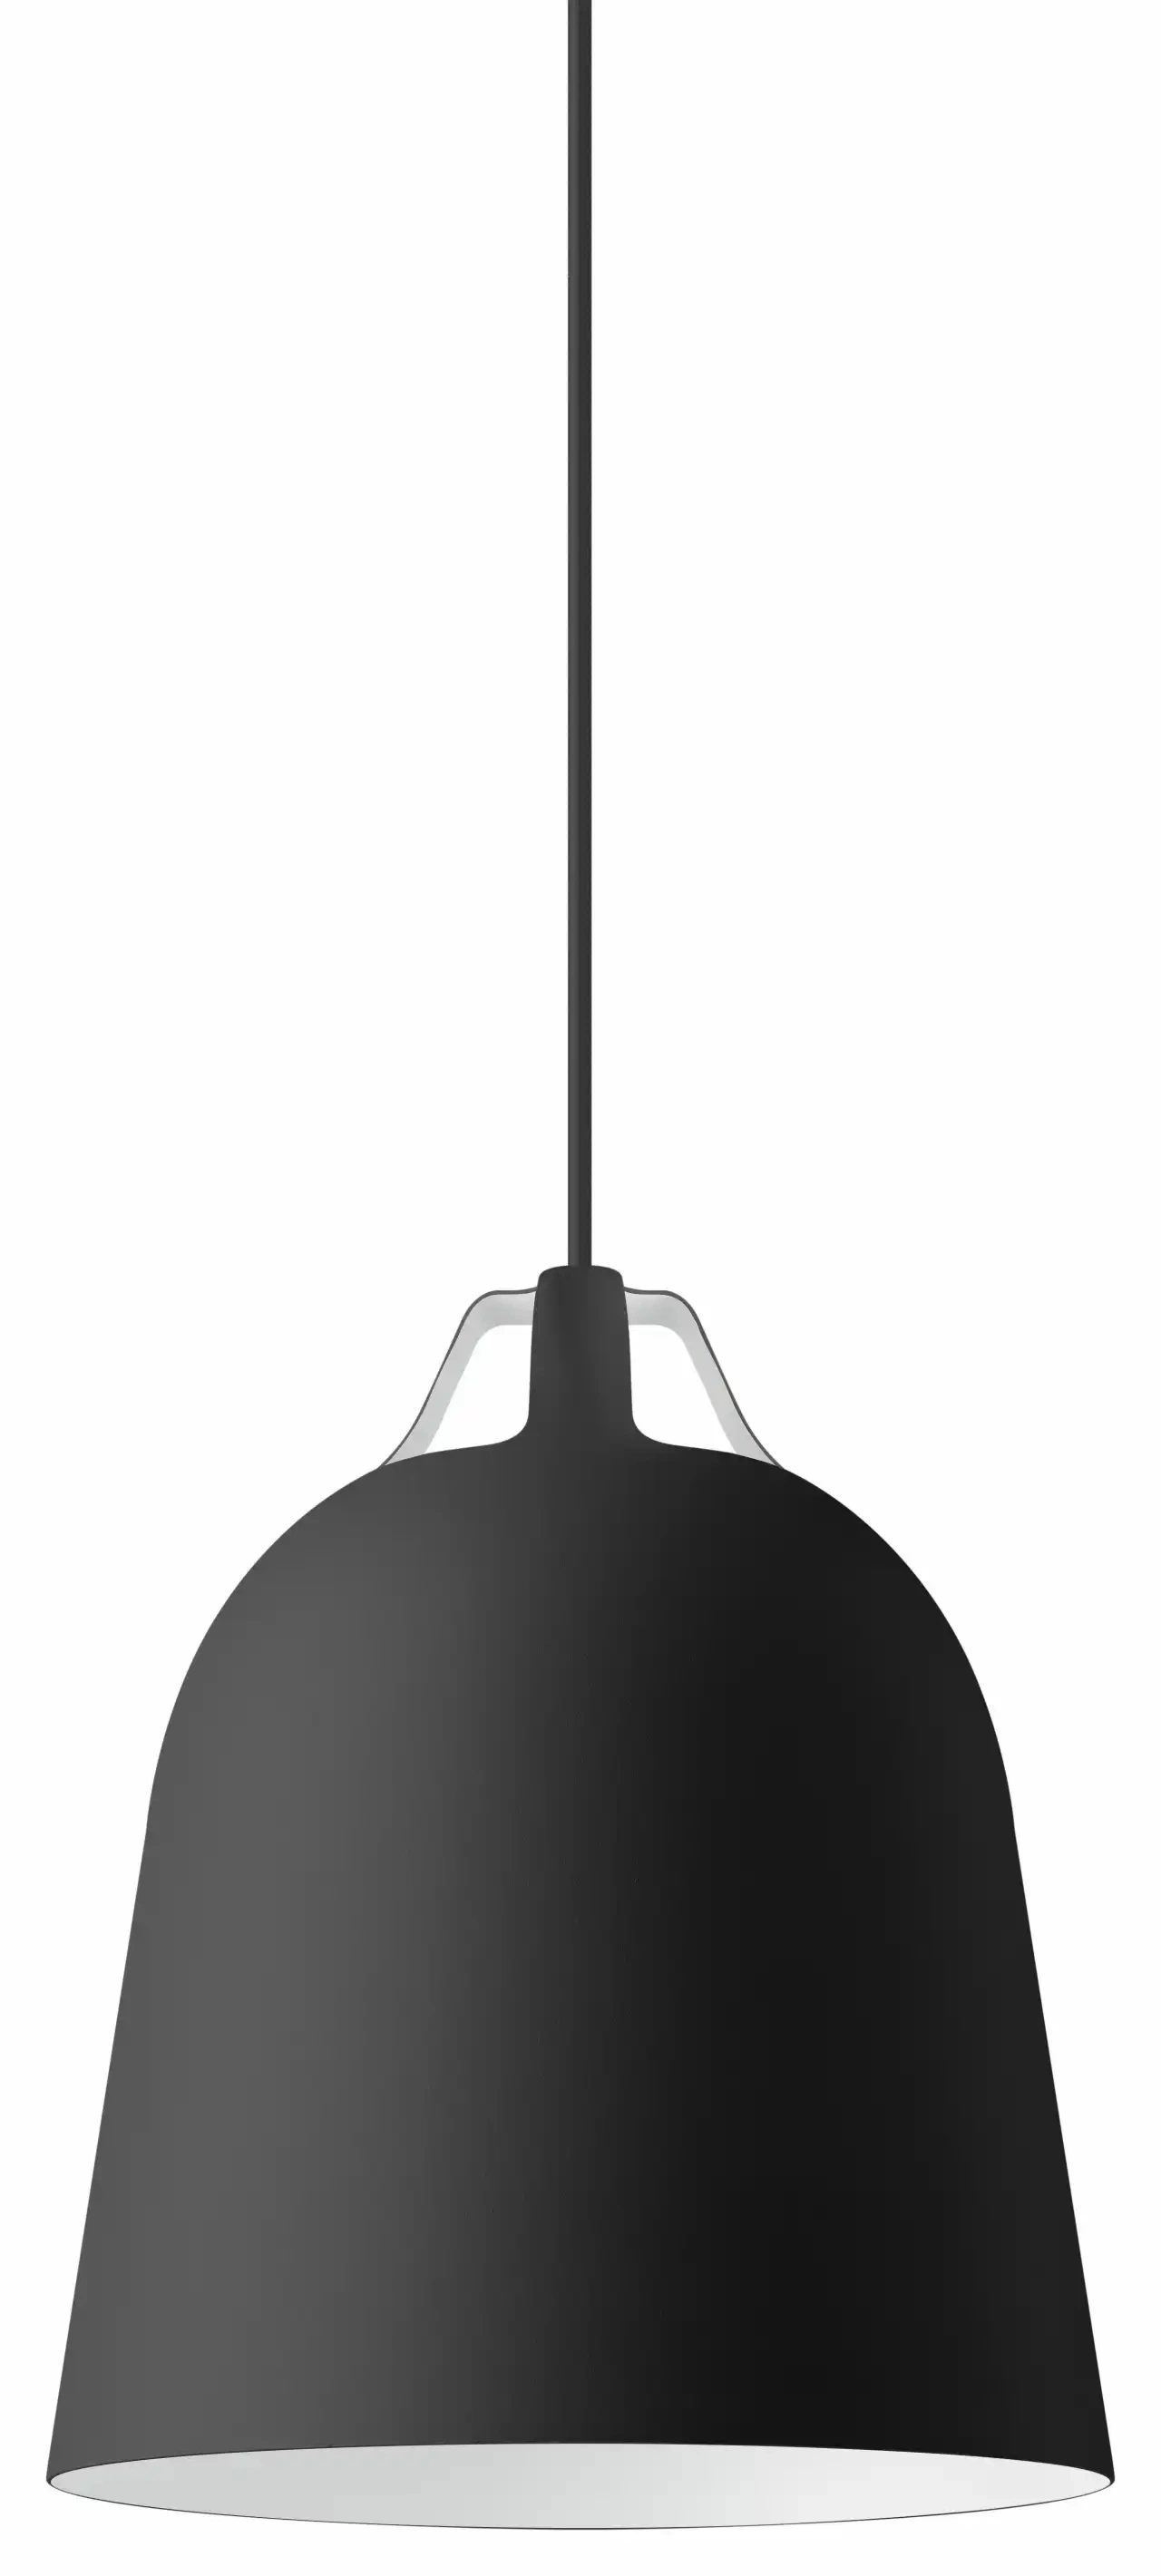 Scandinavia Design Lampe Suspendue Intérieure E27 en Noir Mat